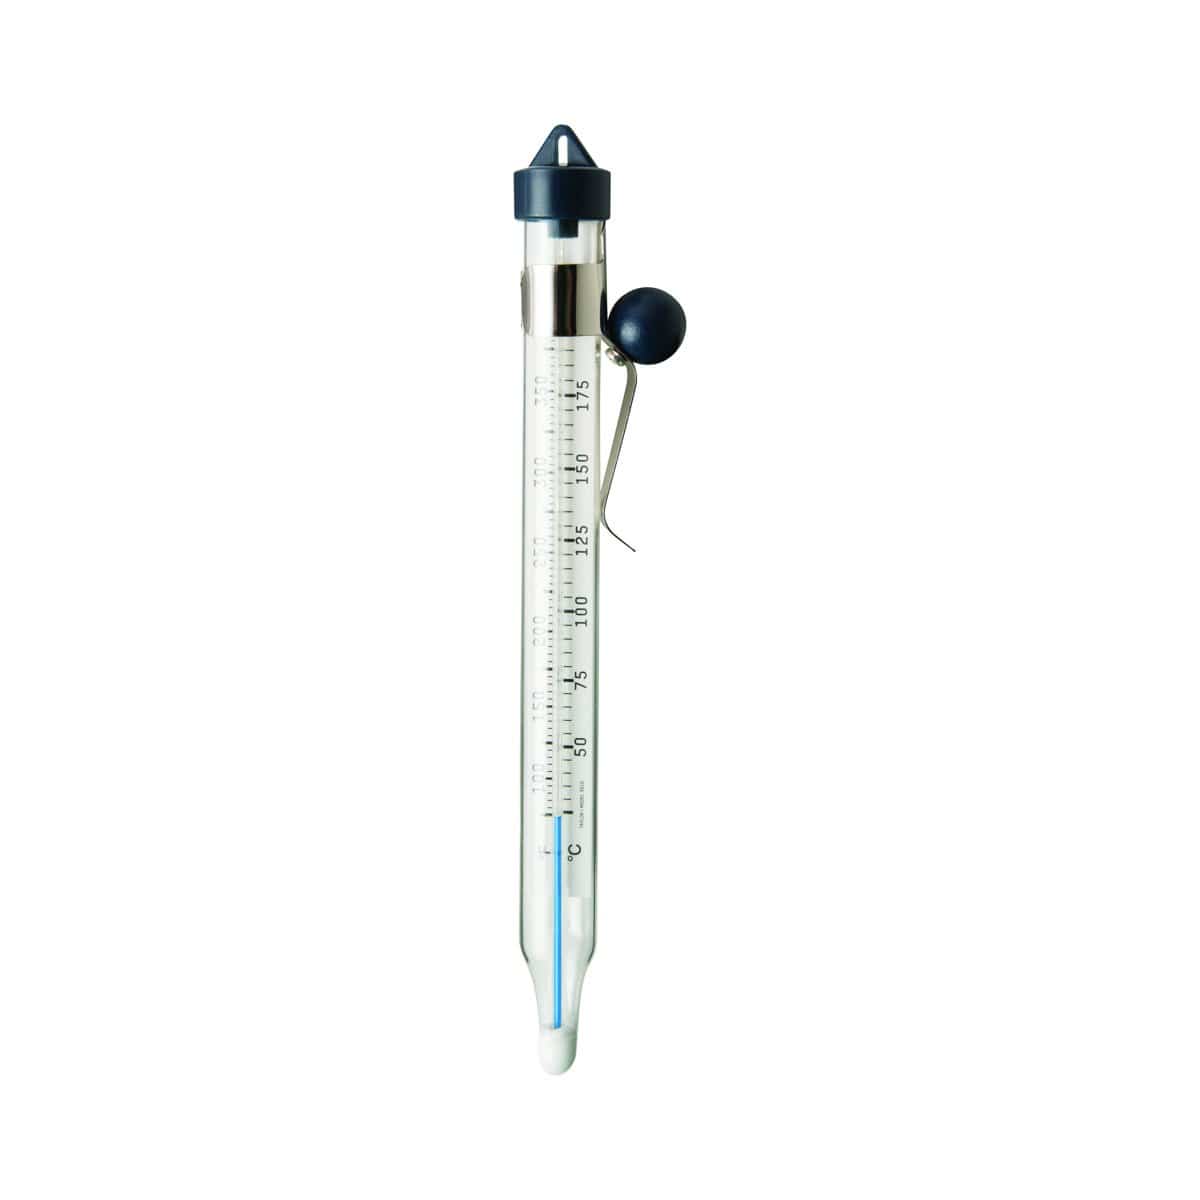 Avanti Glass Tube Deep Fry Thermometer